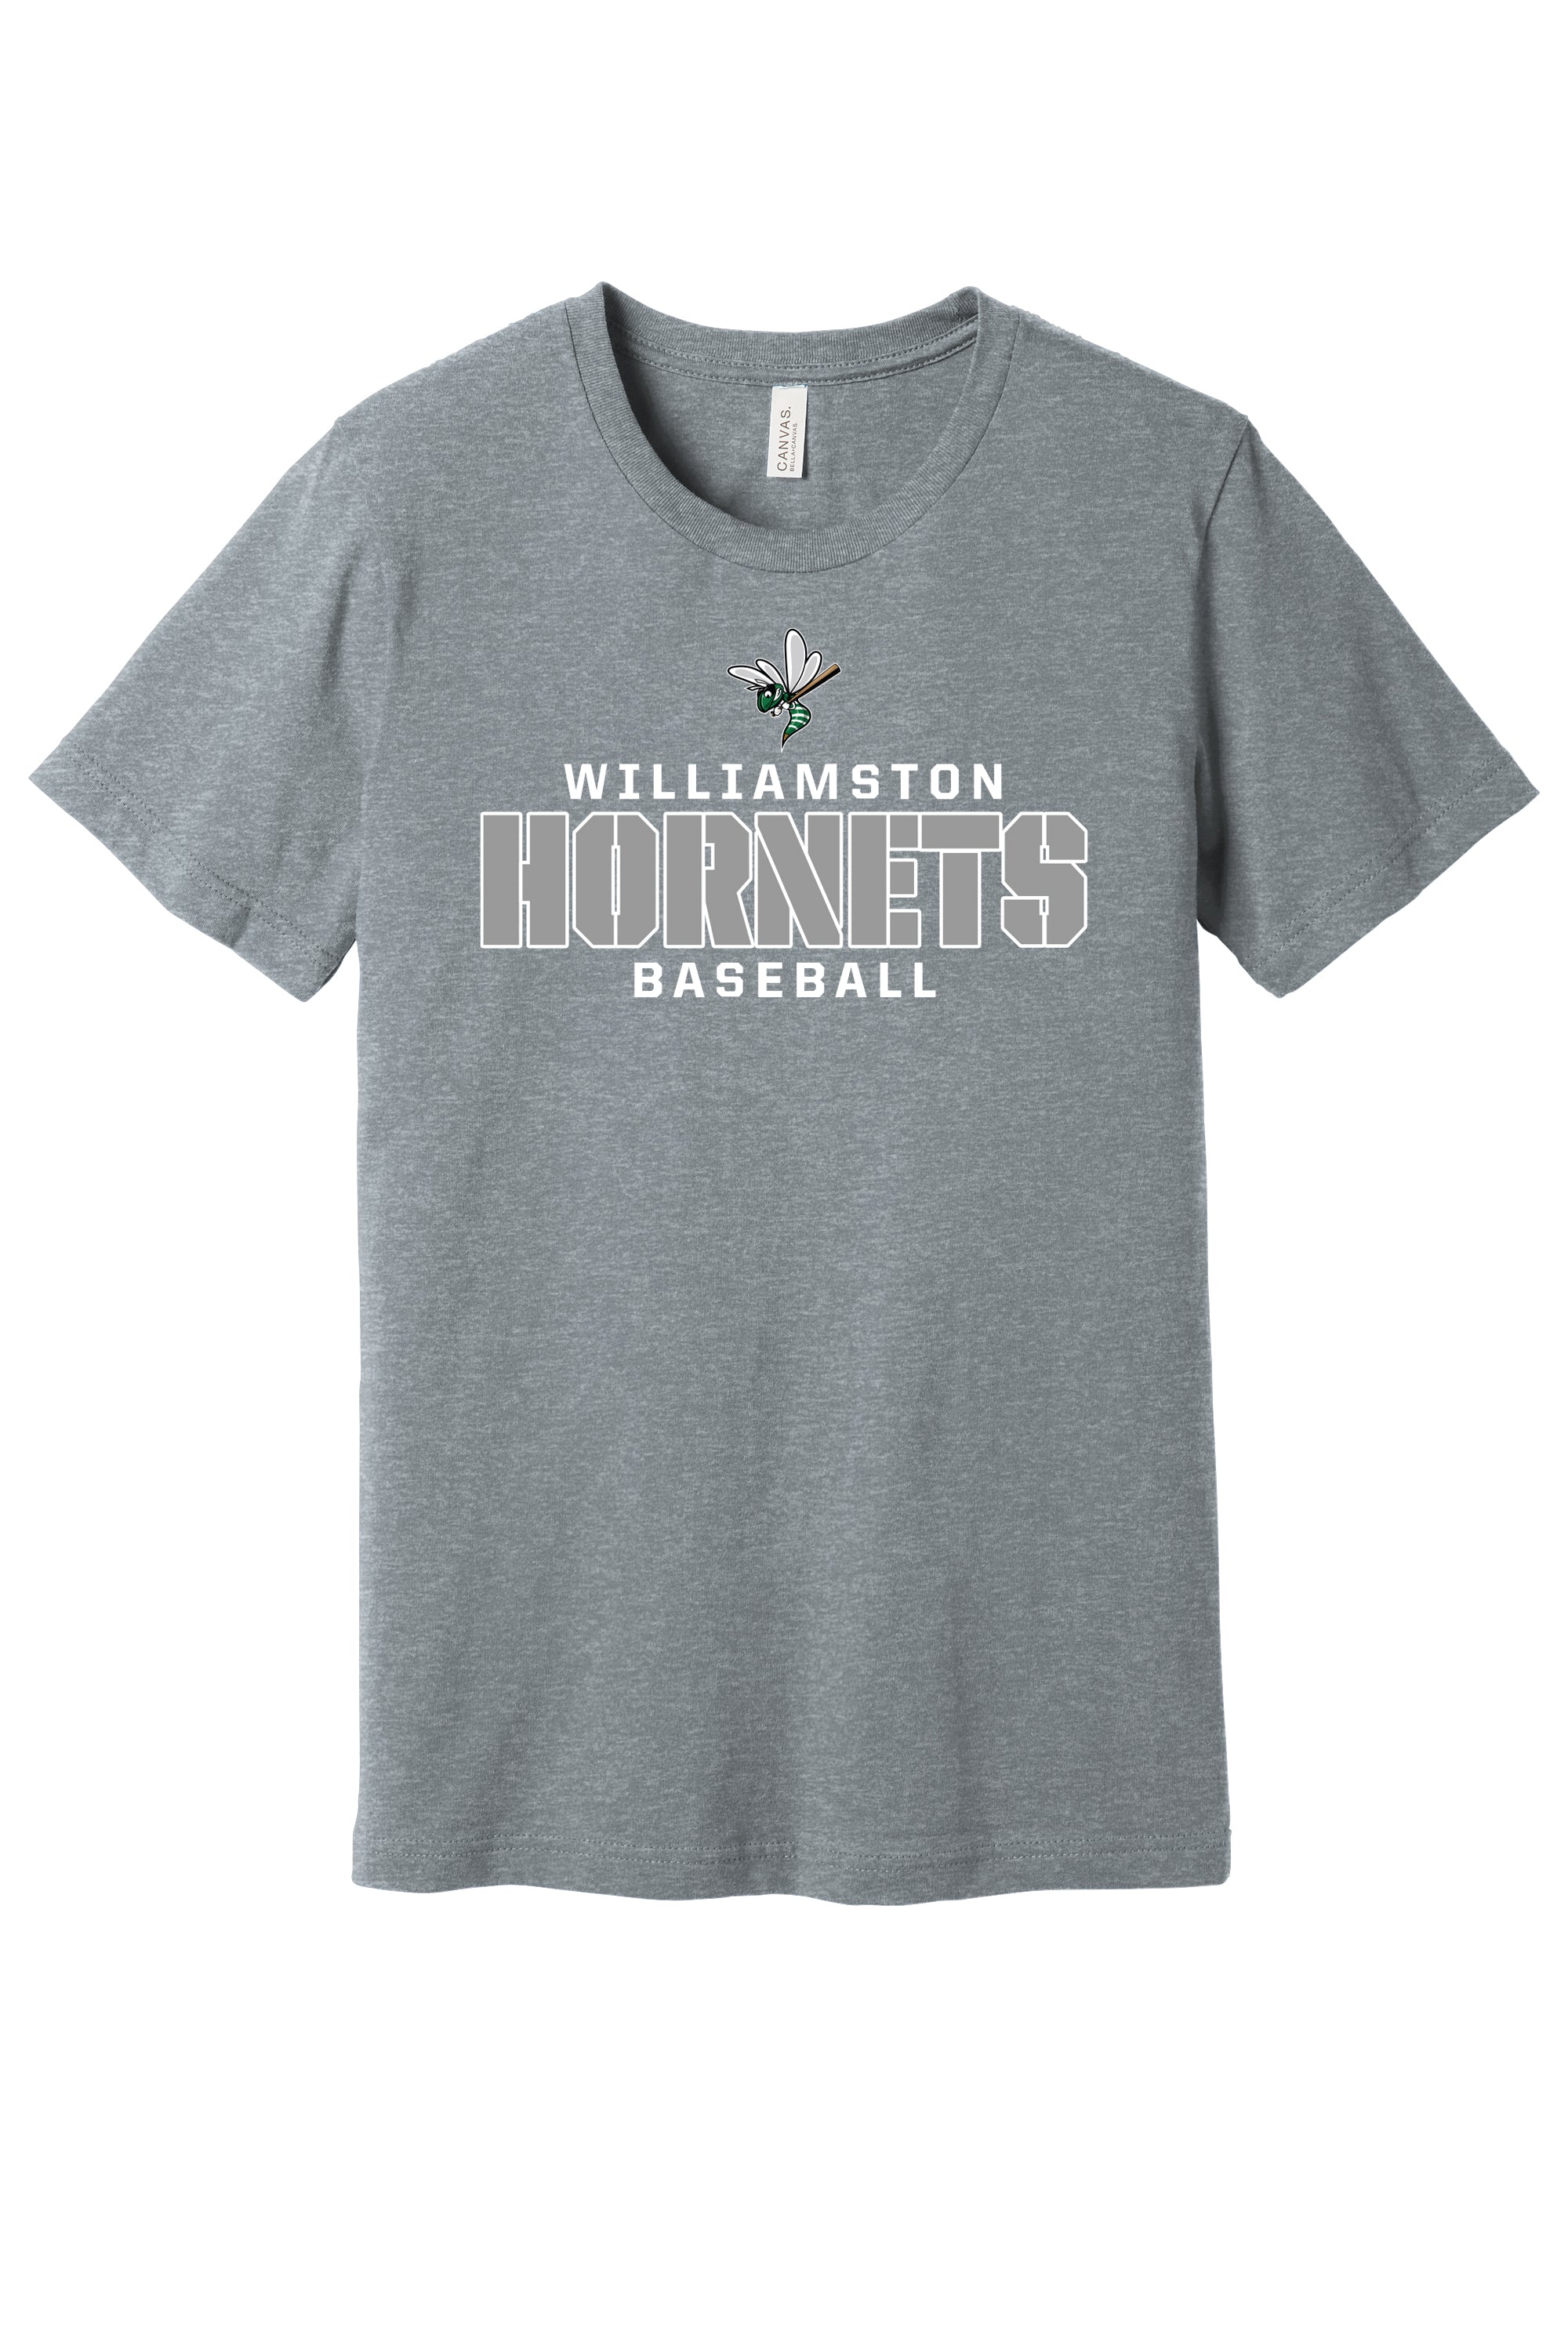 Williamston Baseball - Short Sleeve Tee